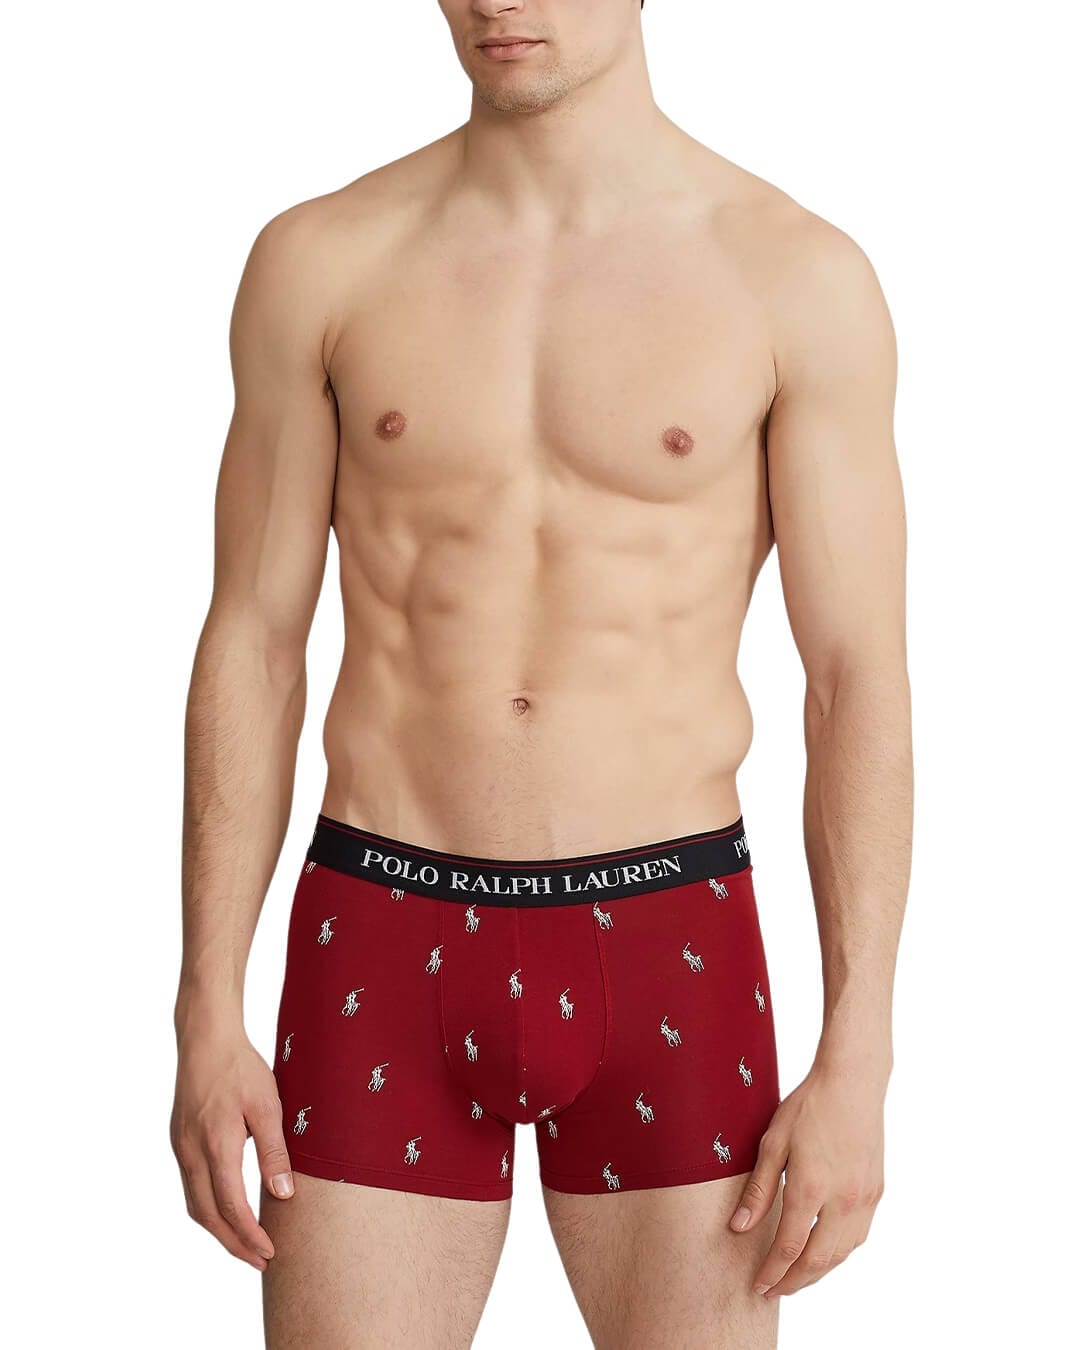 Polo Ralph Lauren Underwear Polo Ralph Lauren Red, Black And Grey Three-Pack Trunks